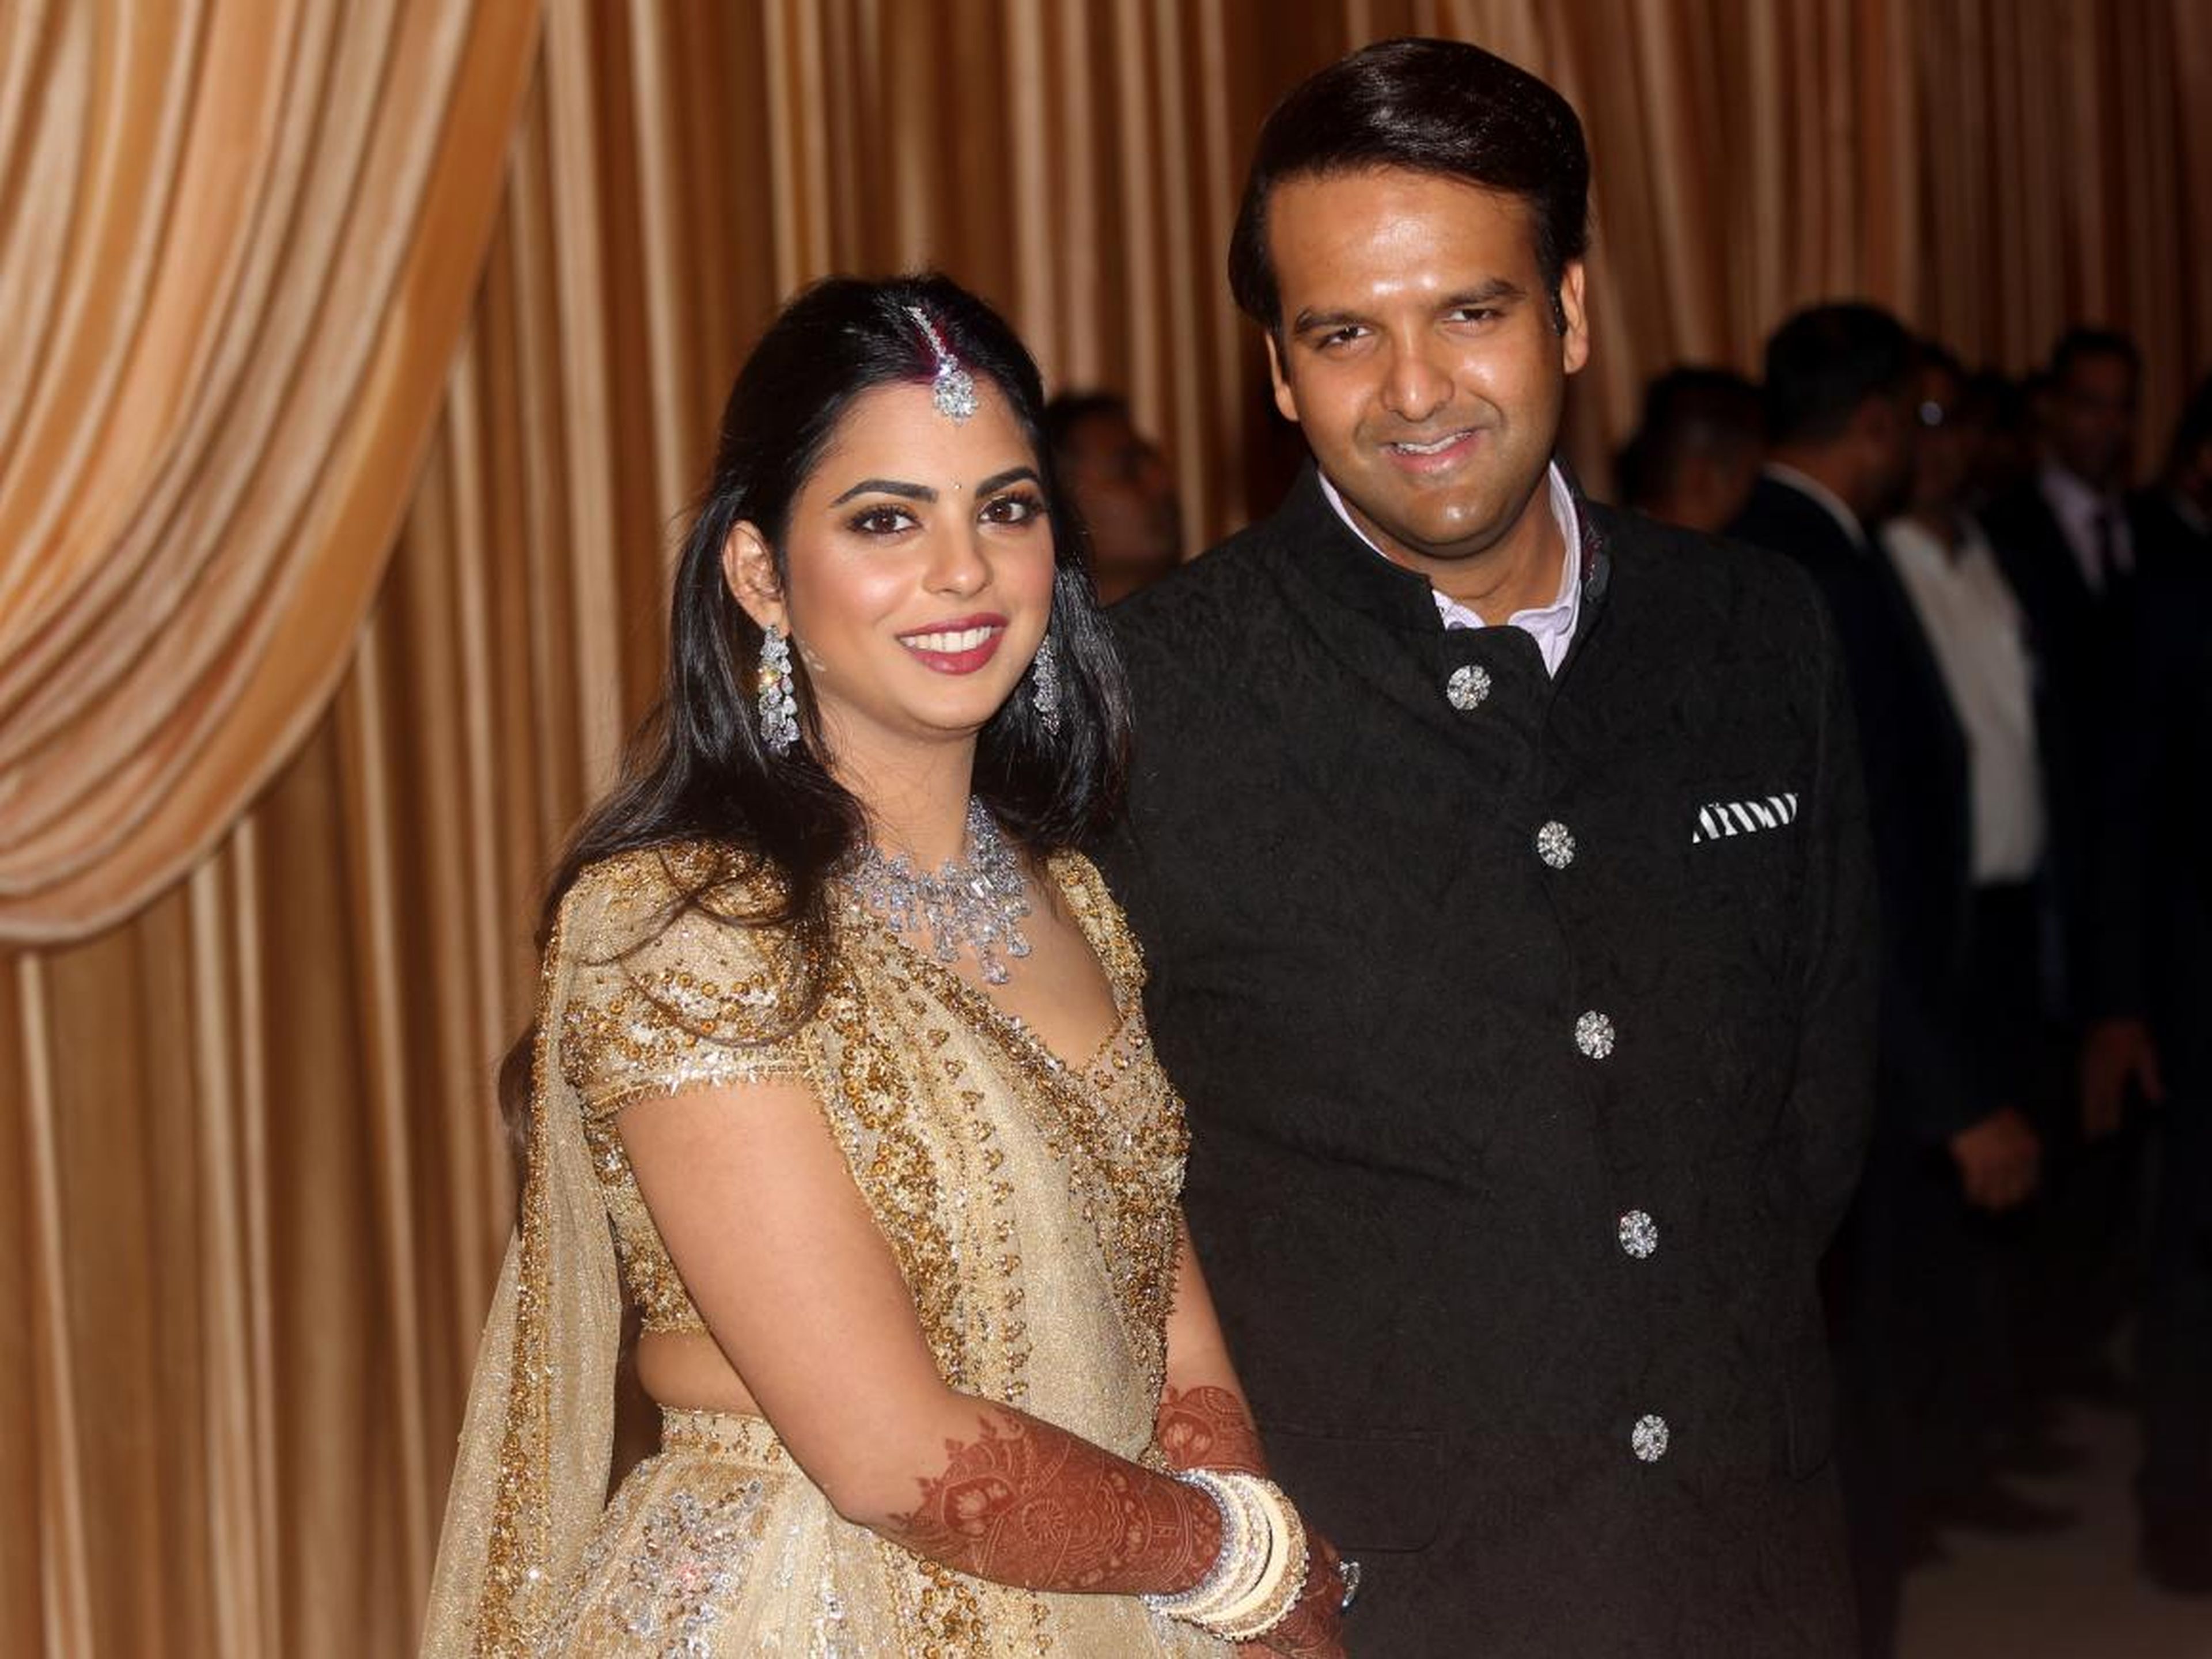 Isha Ambani and her husband Anand Piramal at their wedding reception in Mumbai, India, December 14, 2018.